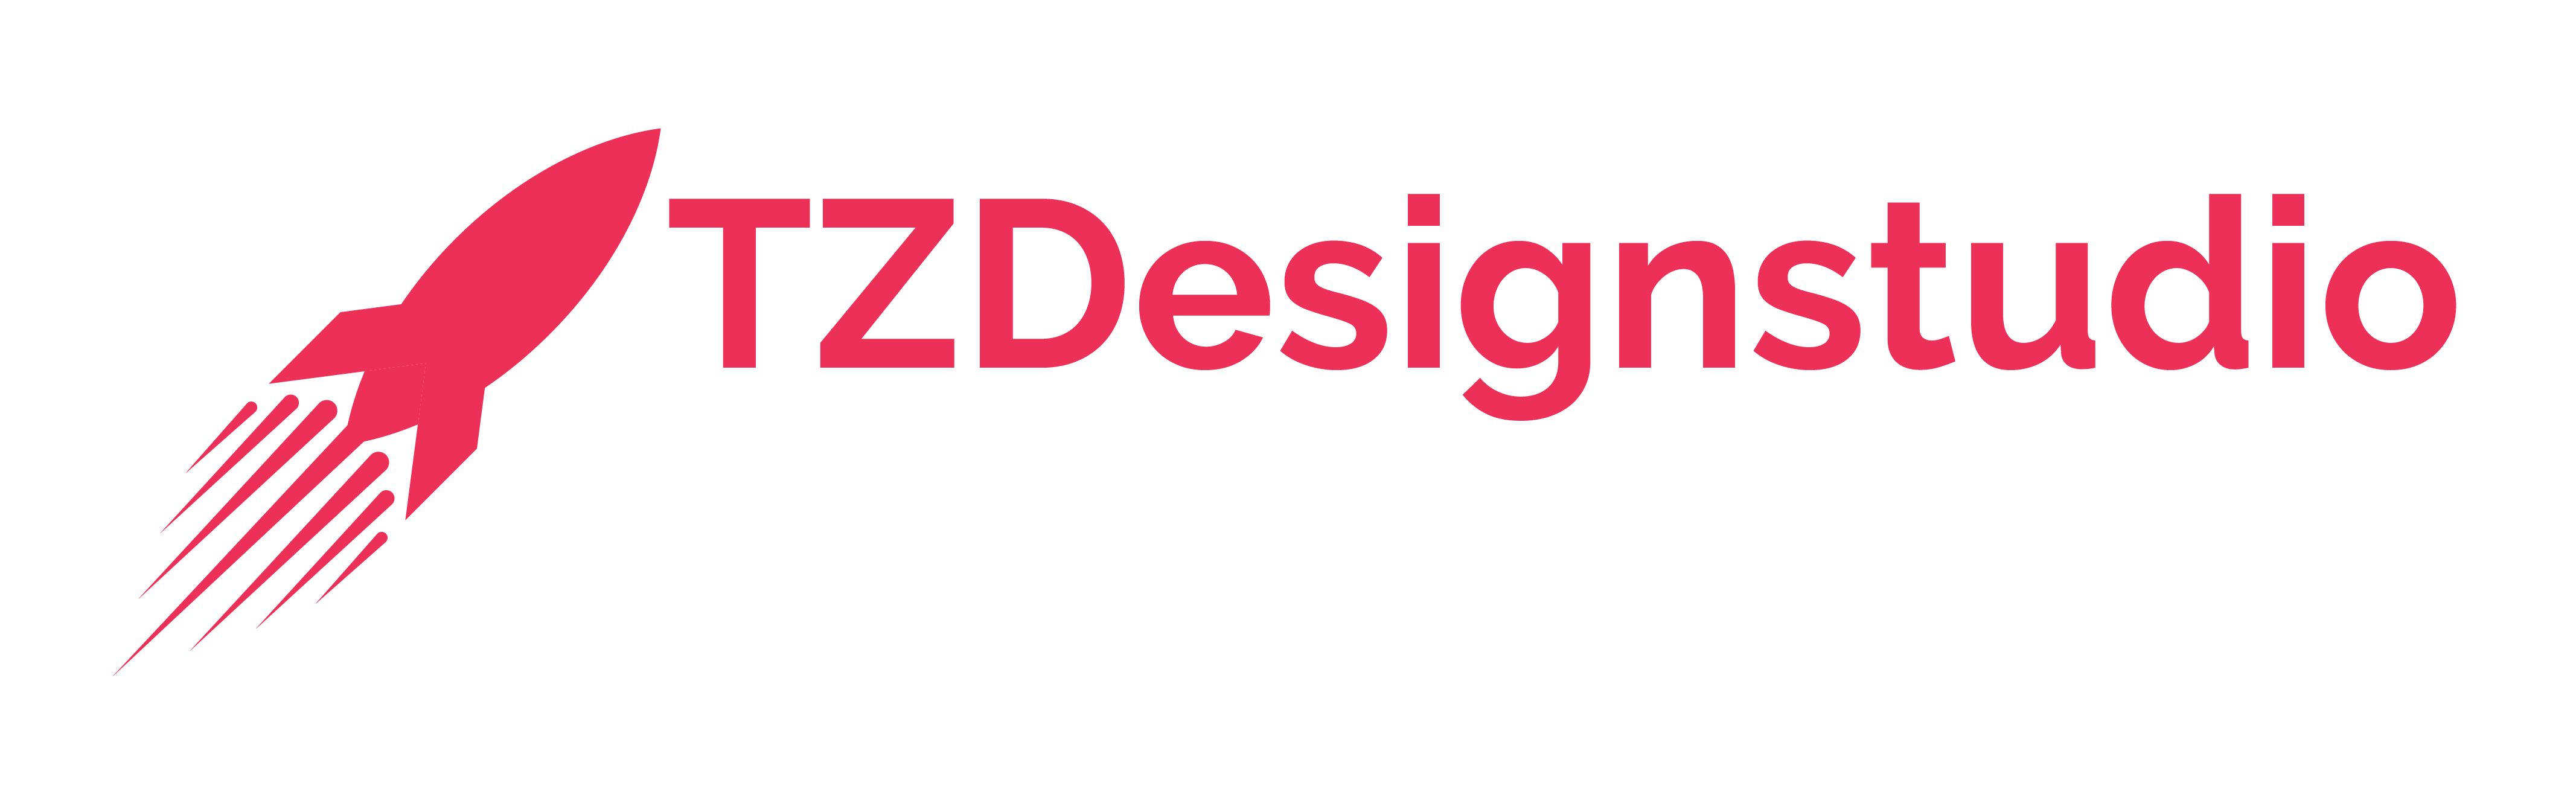 TZDesign Studio Logo